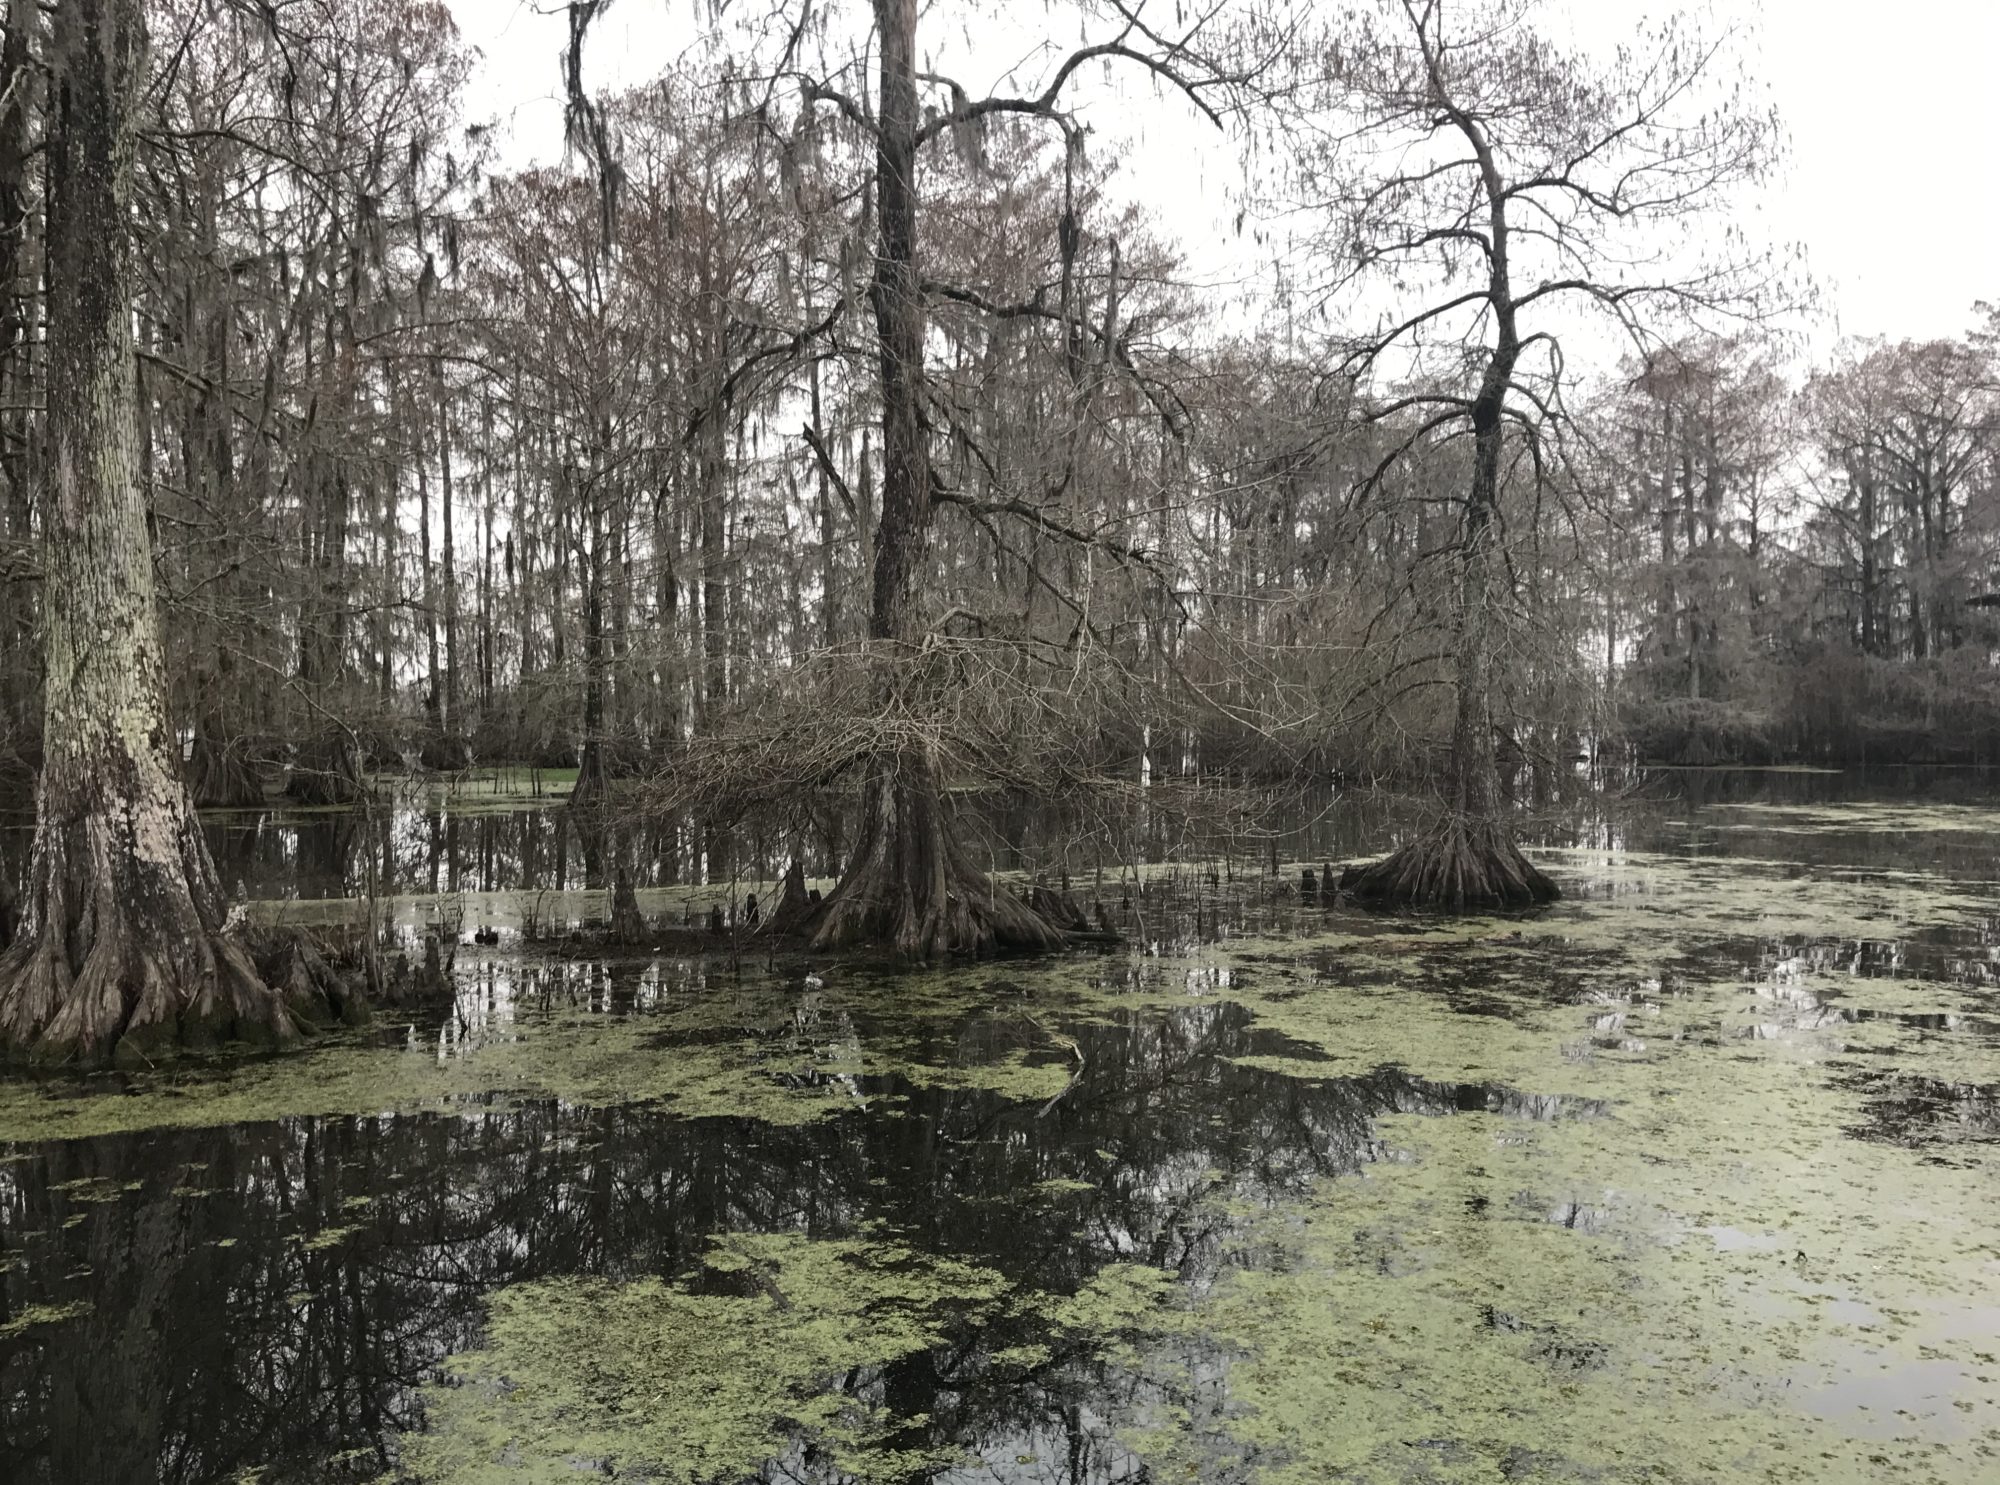 swamp tour near lafayette la